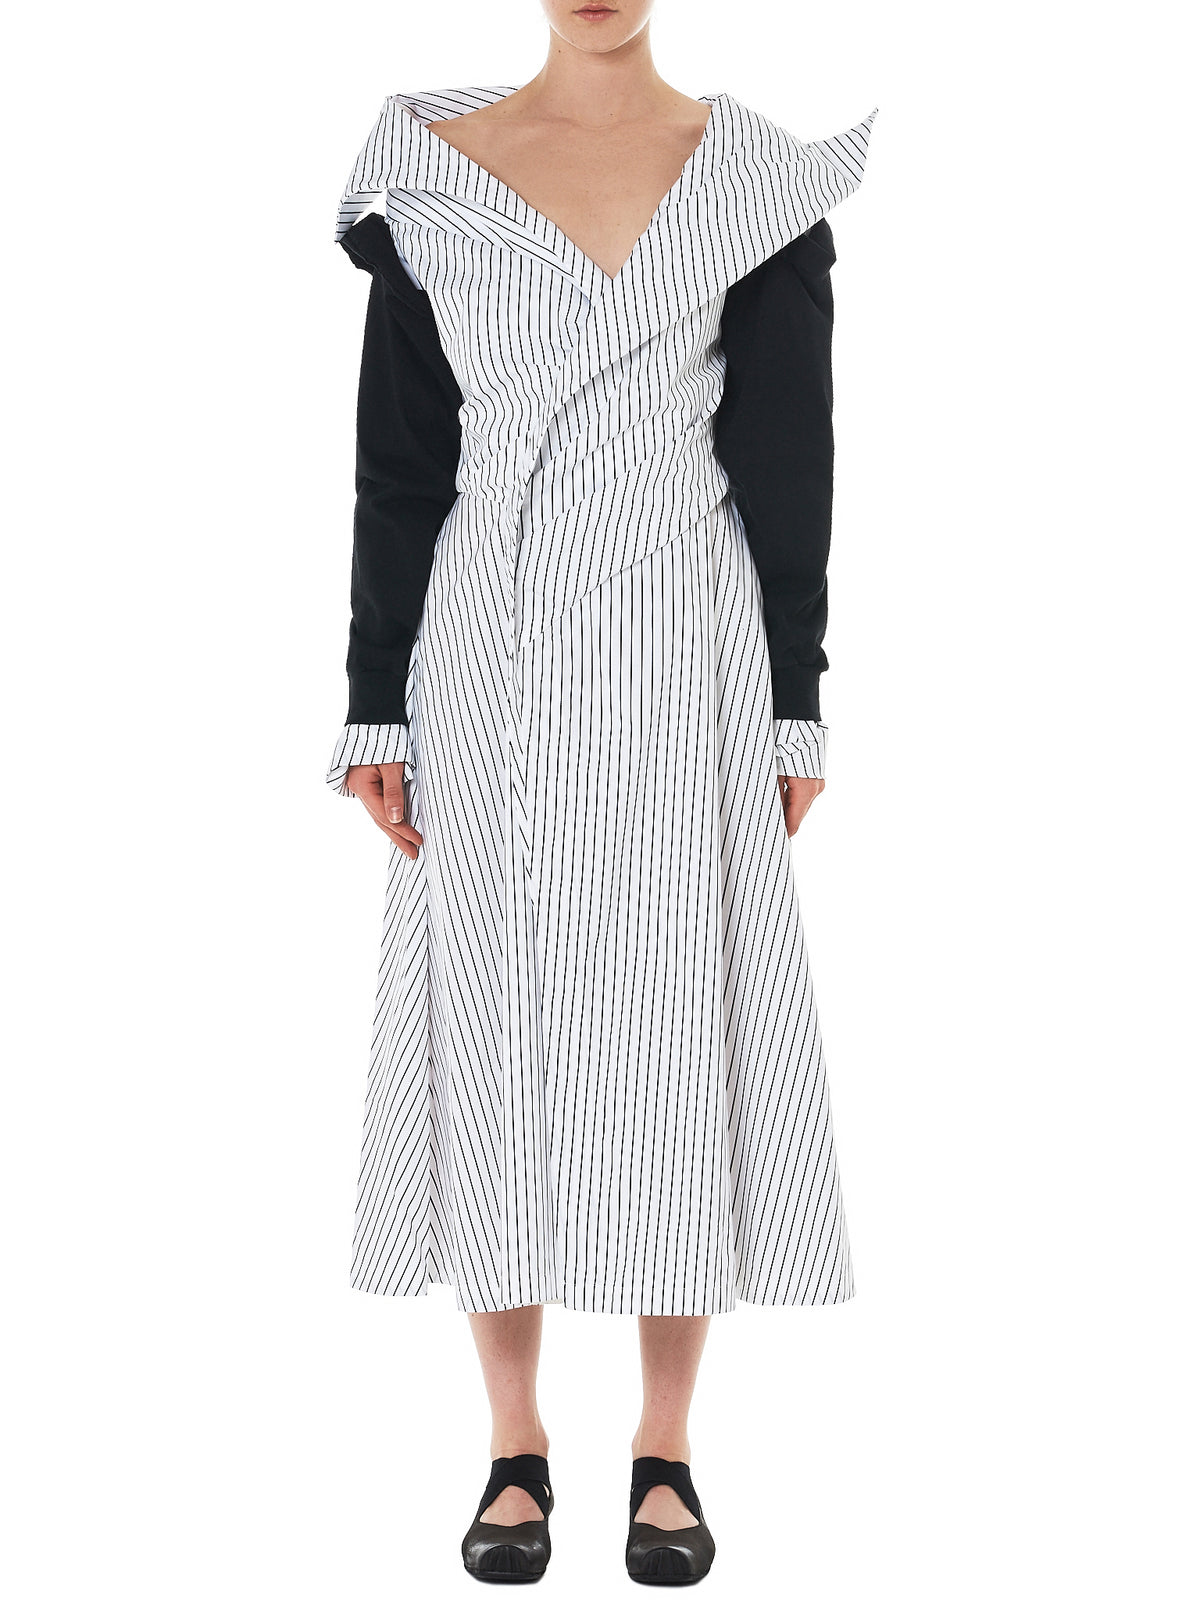 Aganovich Striped Dress - Hlorenzo Front